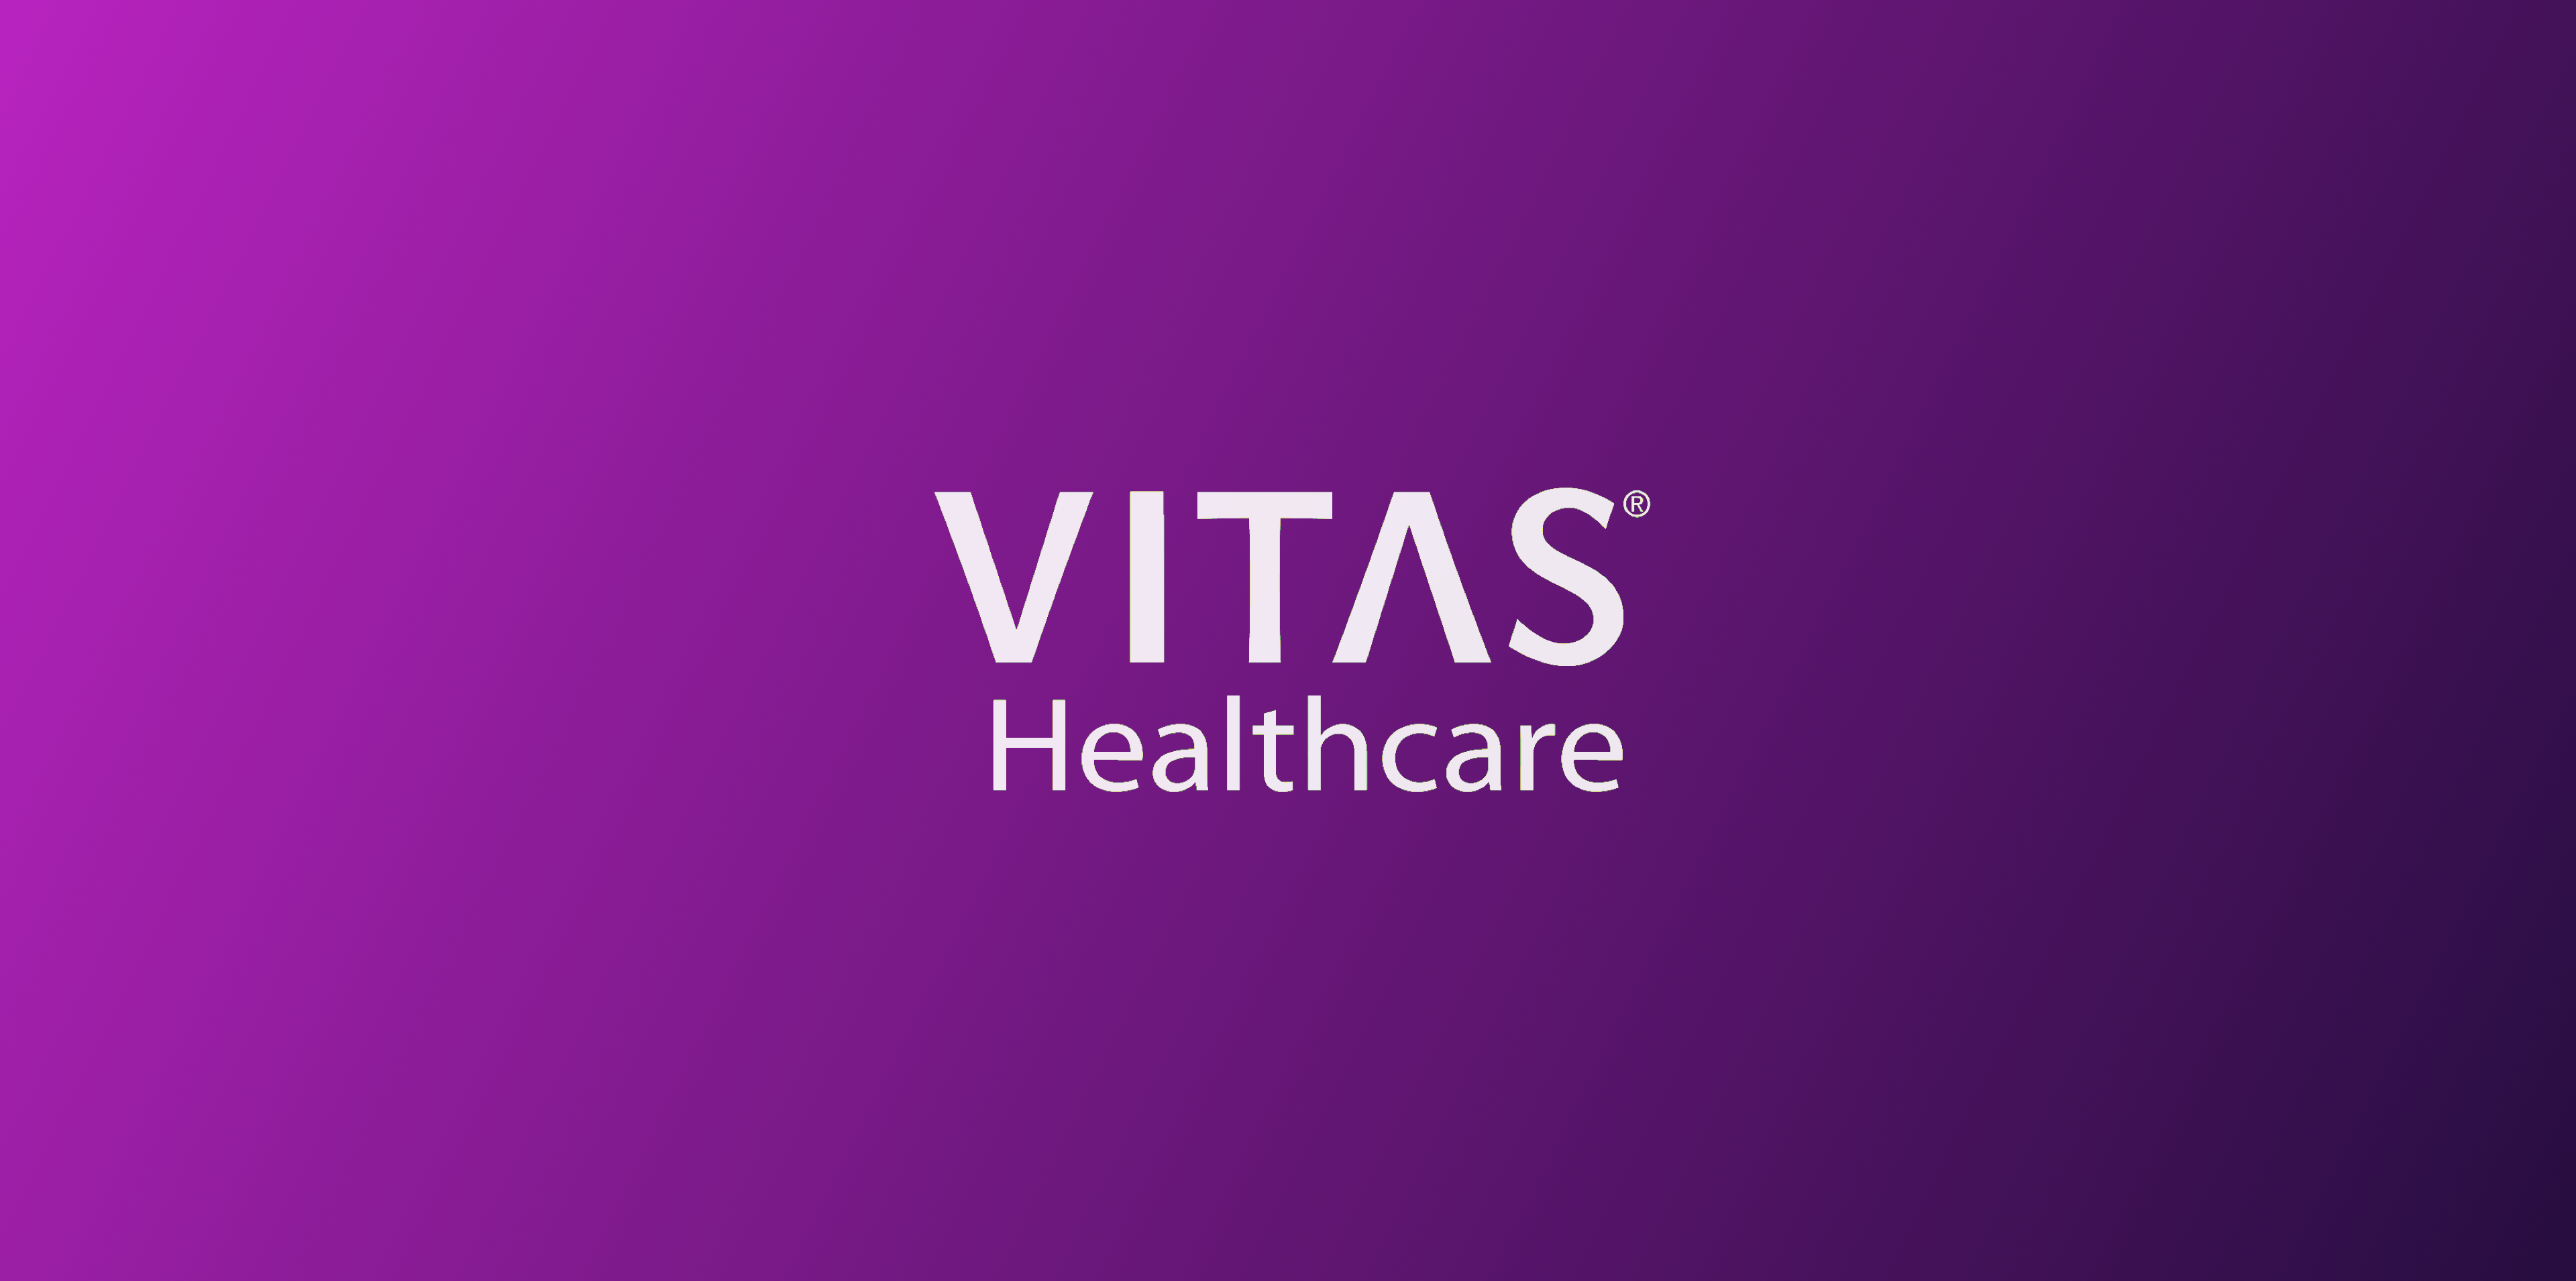 Vitas Healthcare Case Study